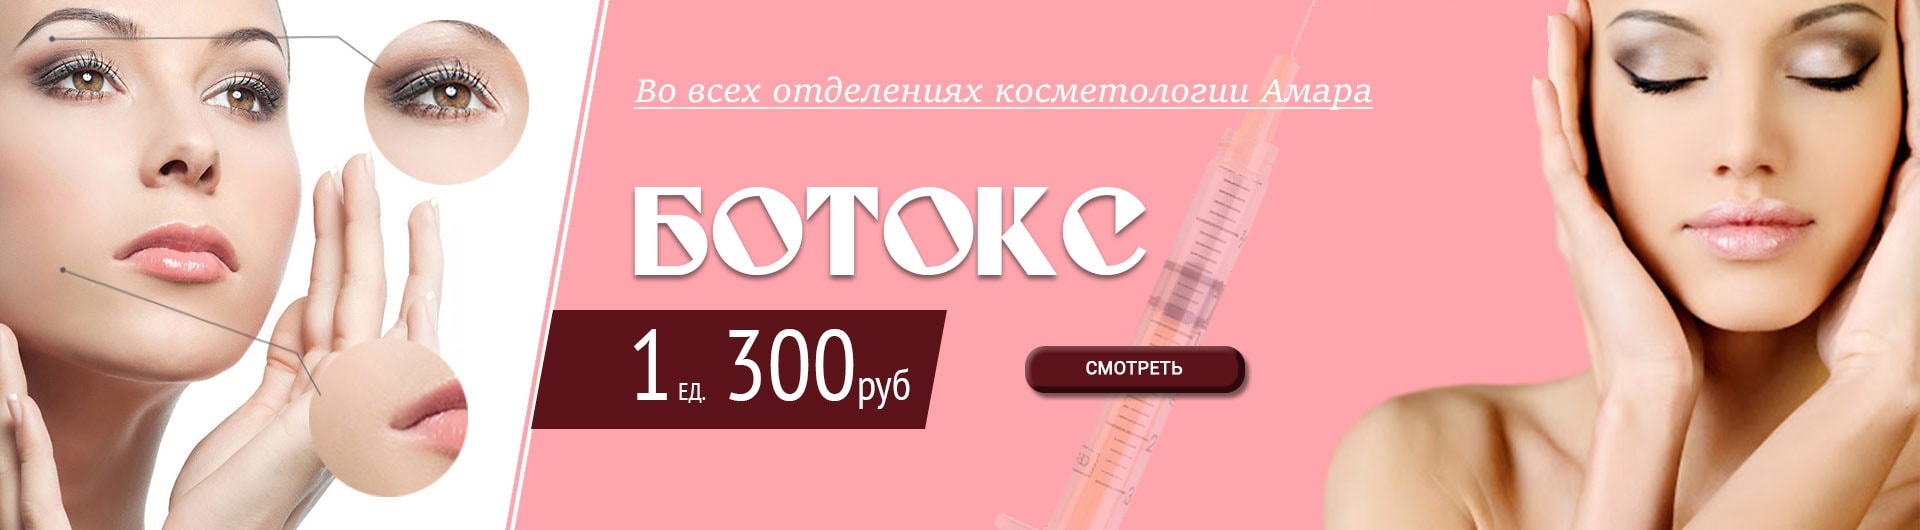 Акция Ботокс 1 ед. 300 рублей!